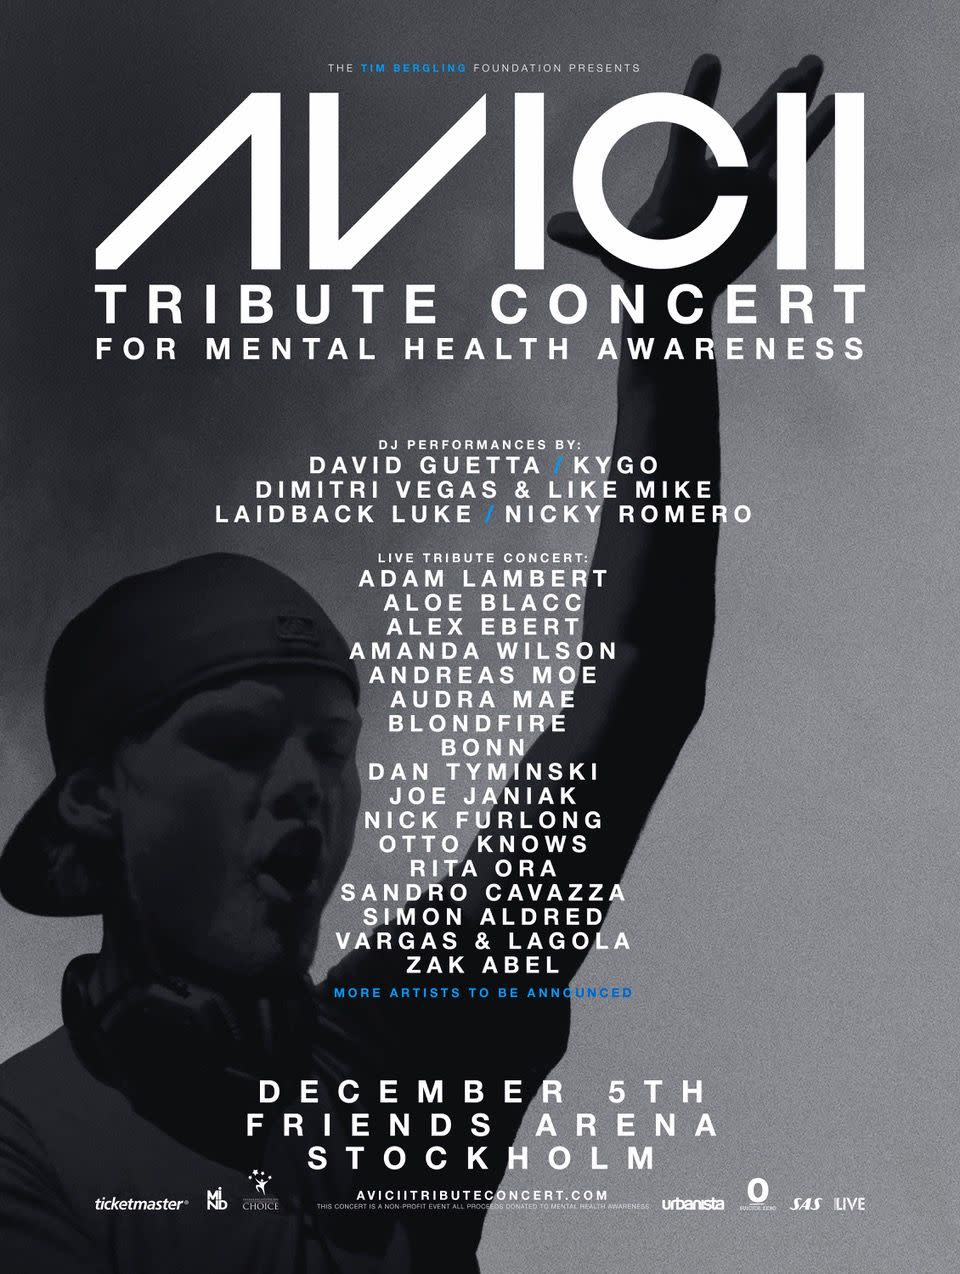 Avicii tribute concert poster